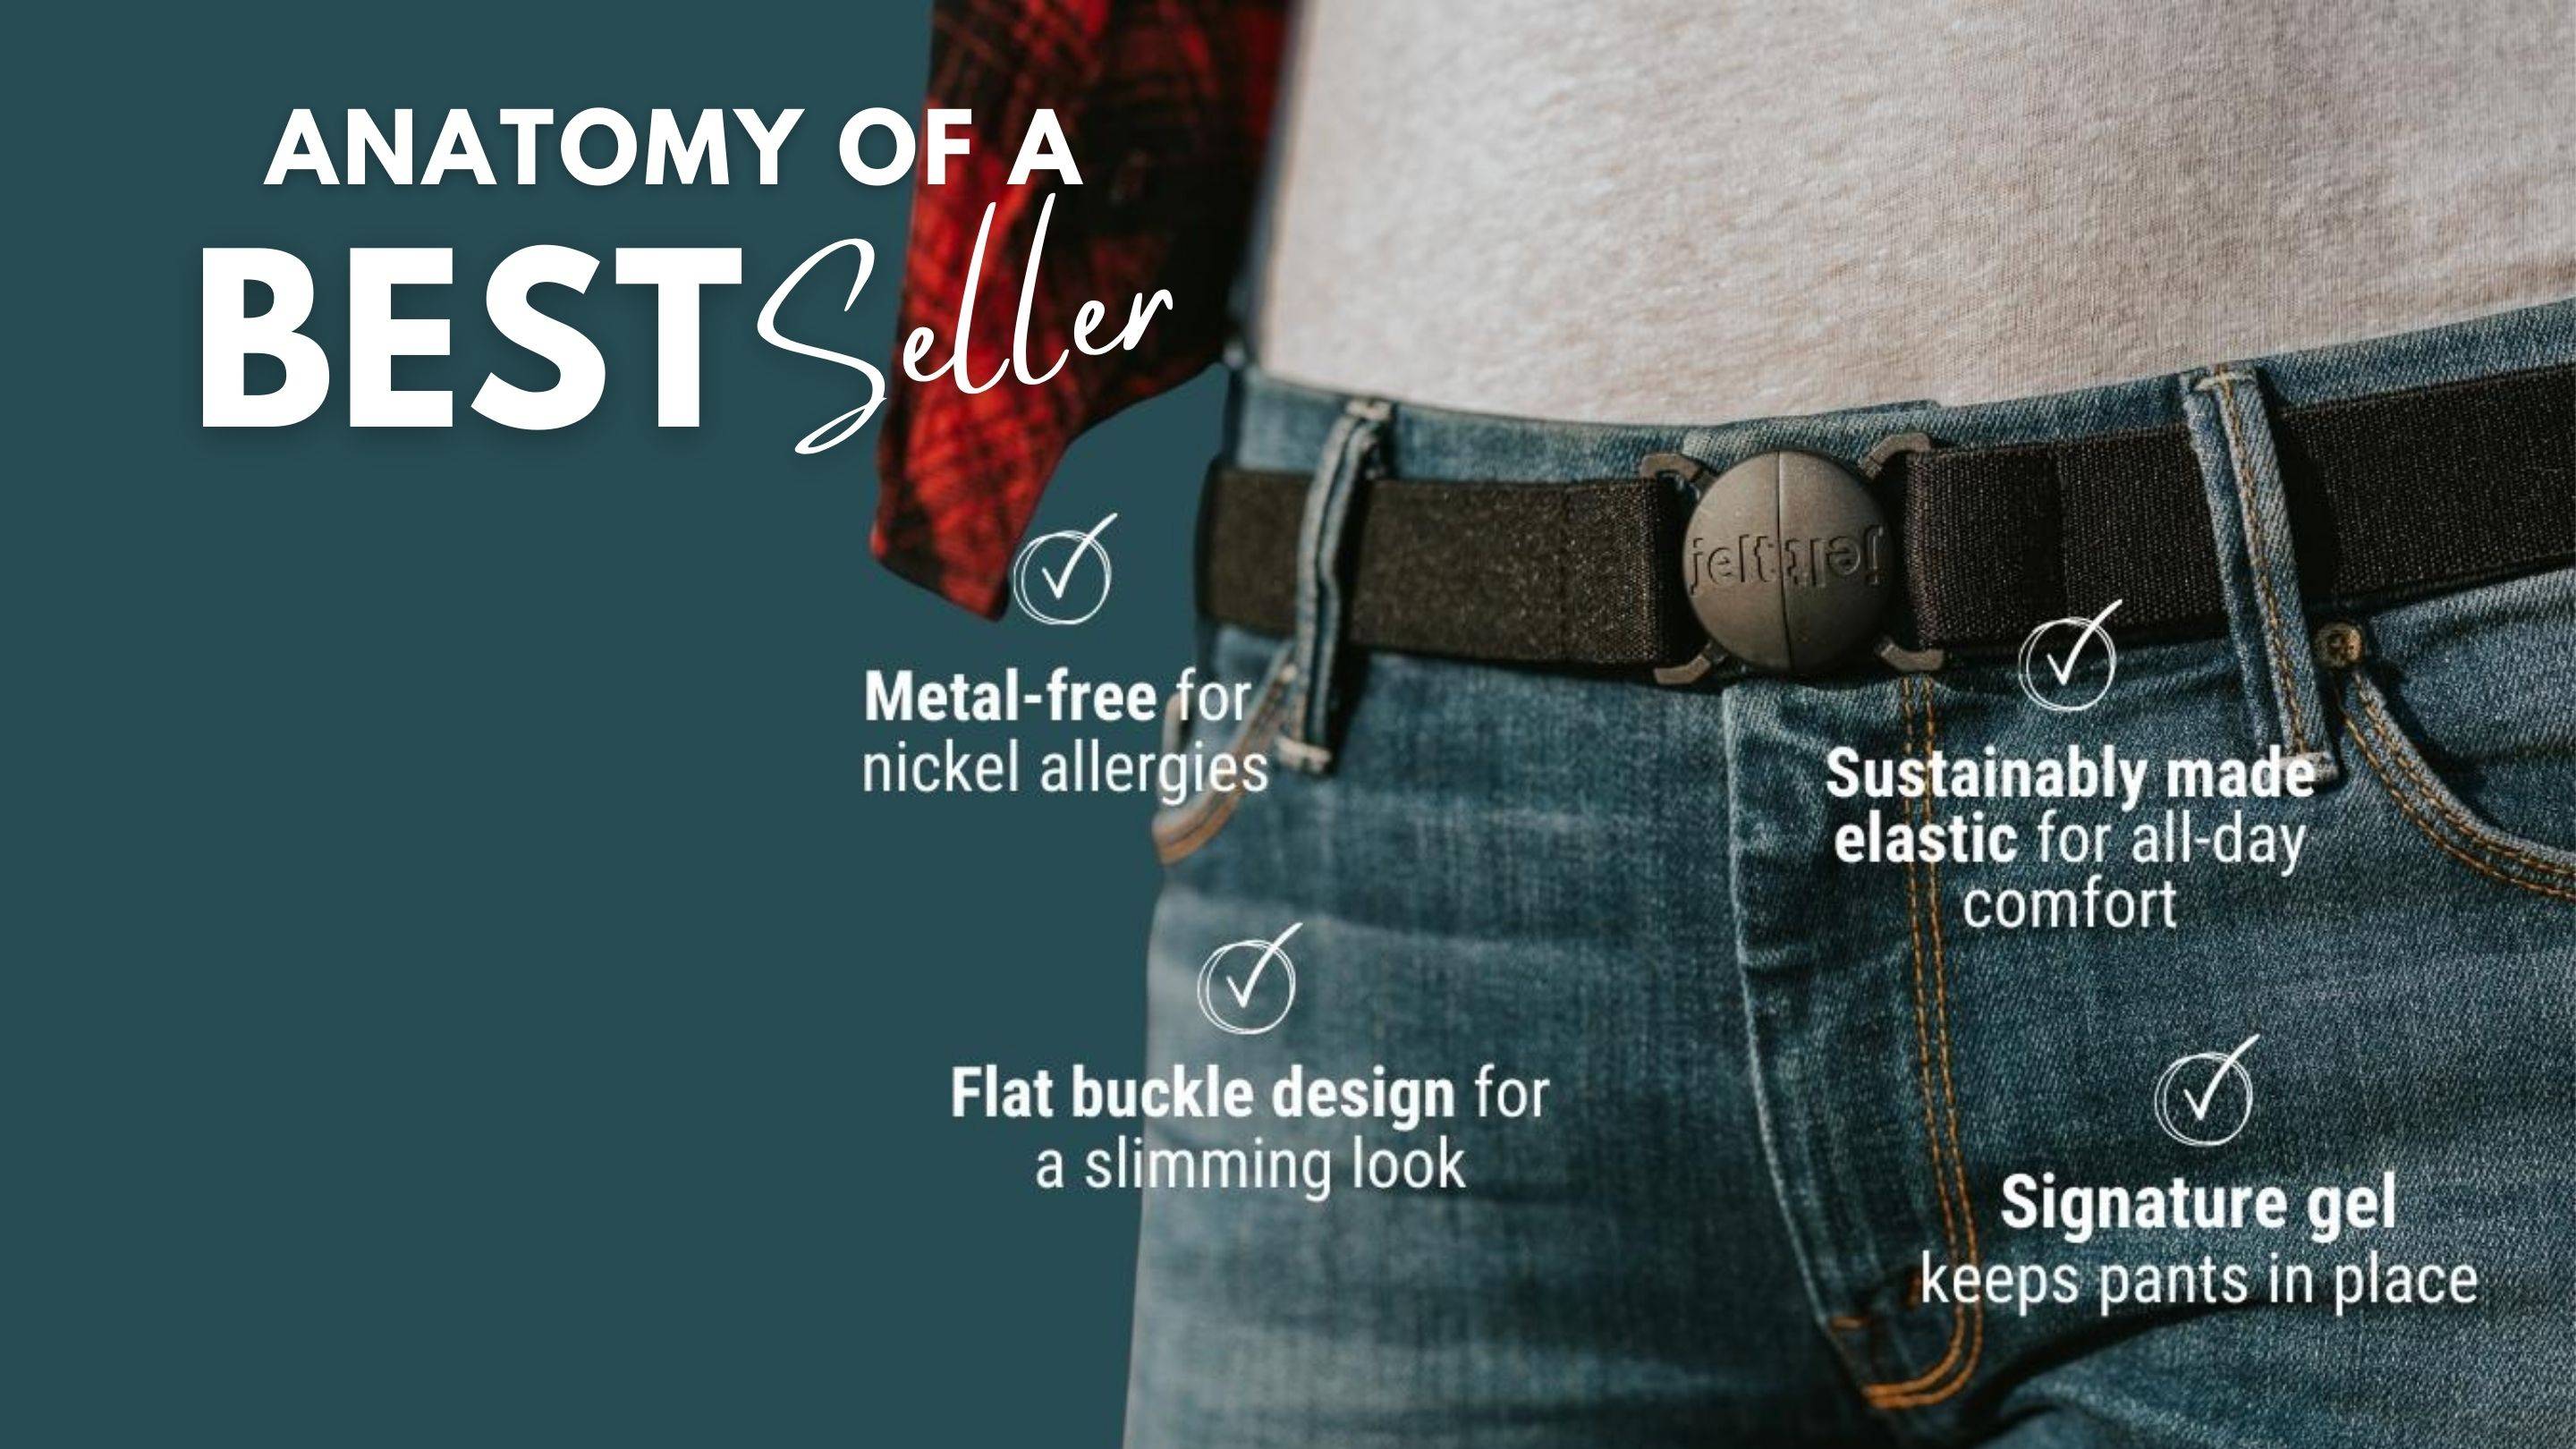 Anatomy of a Jelt original belt